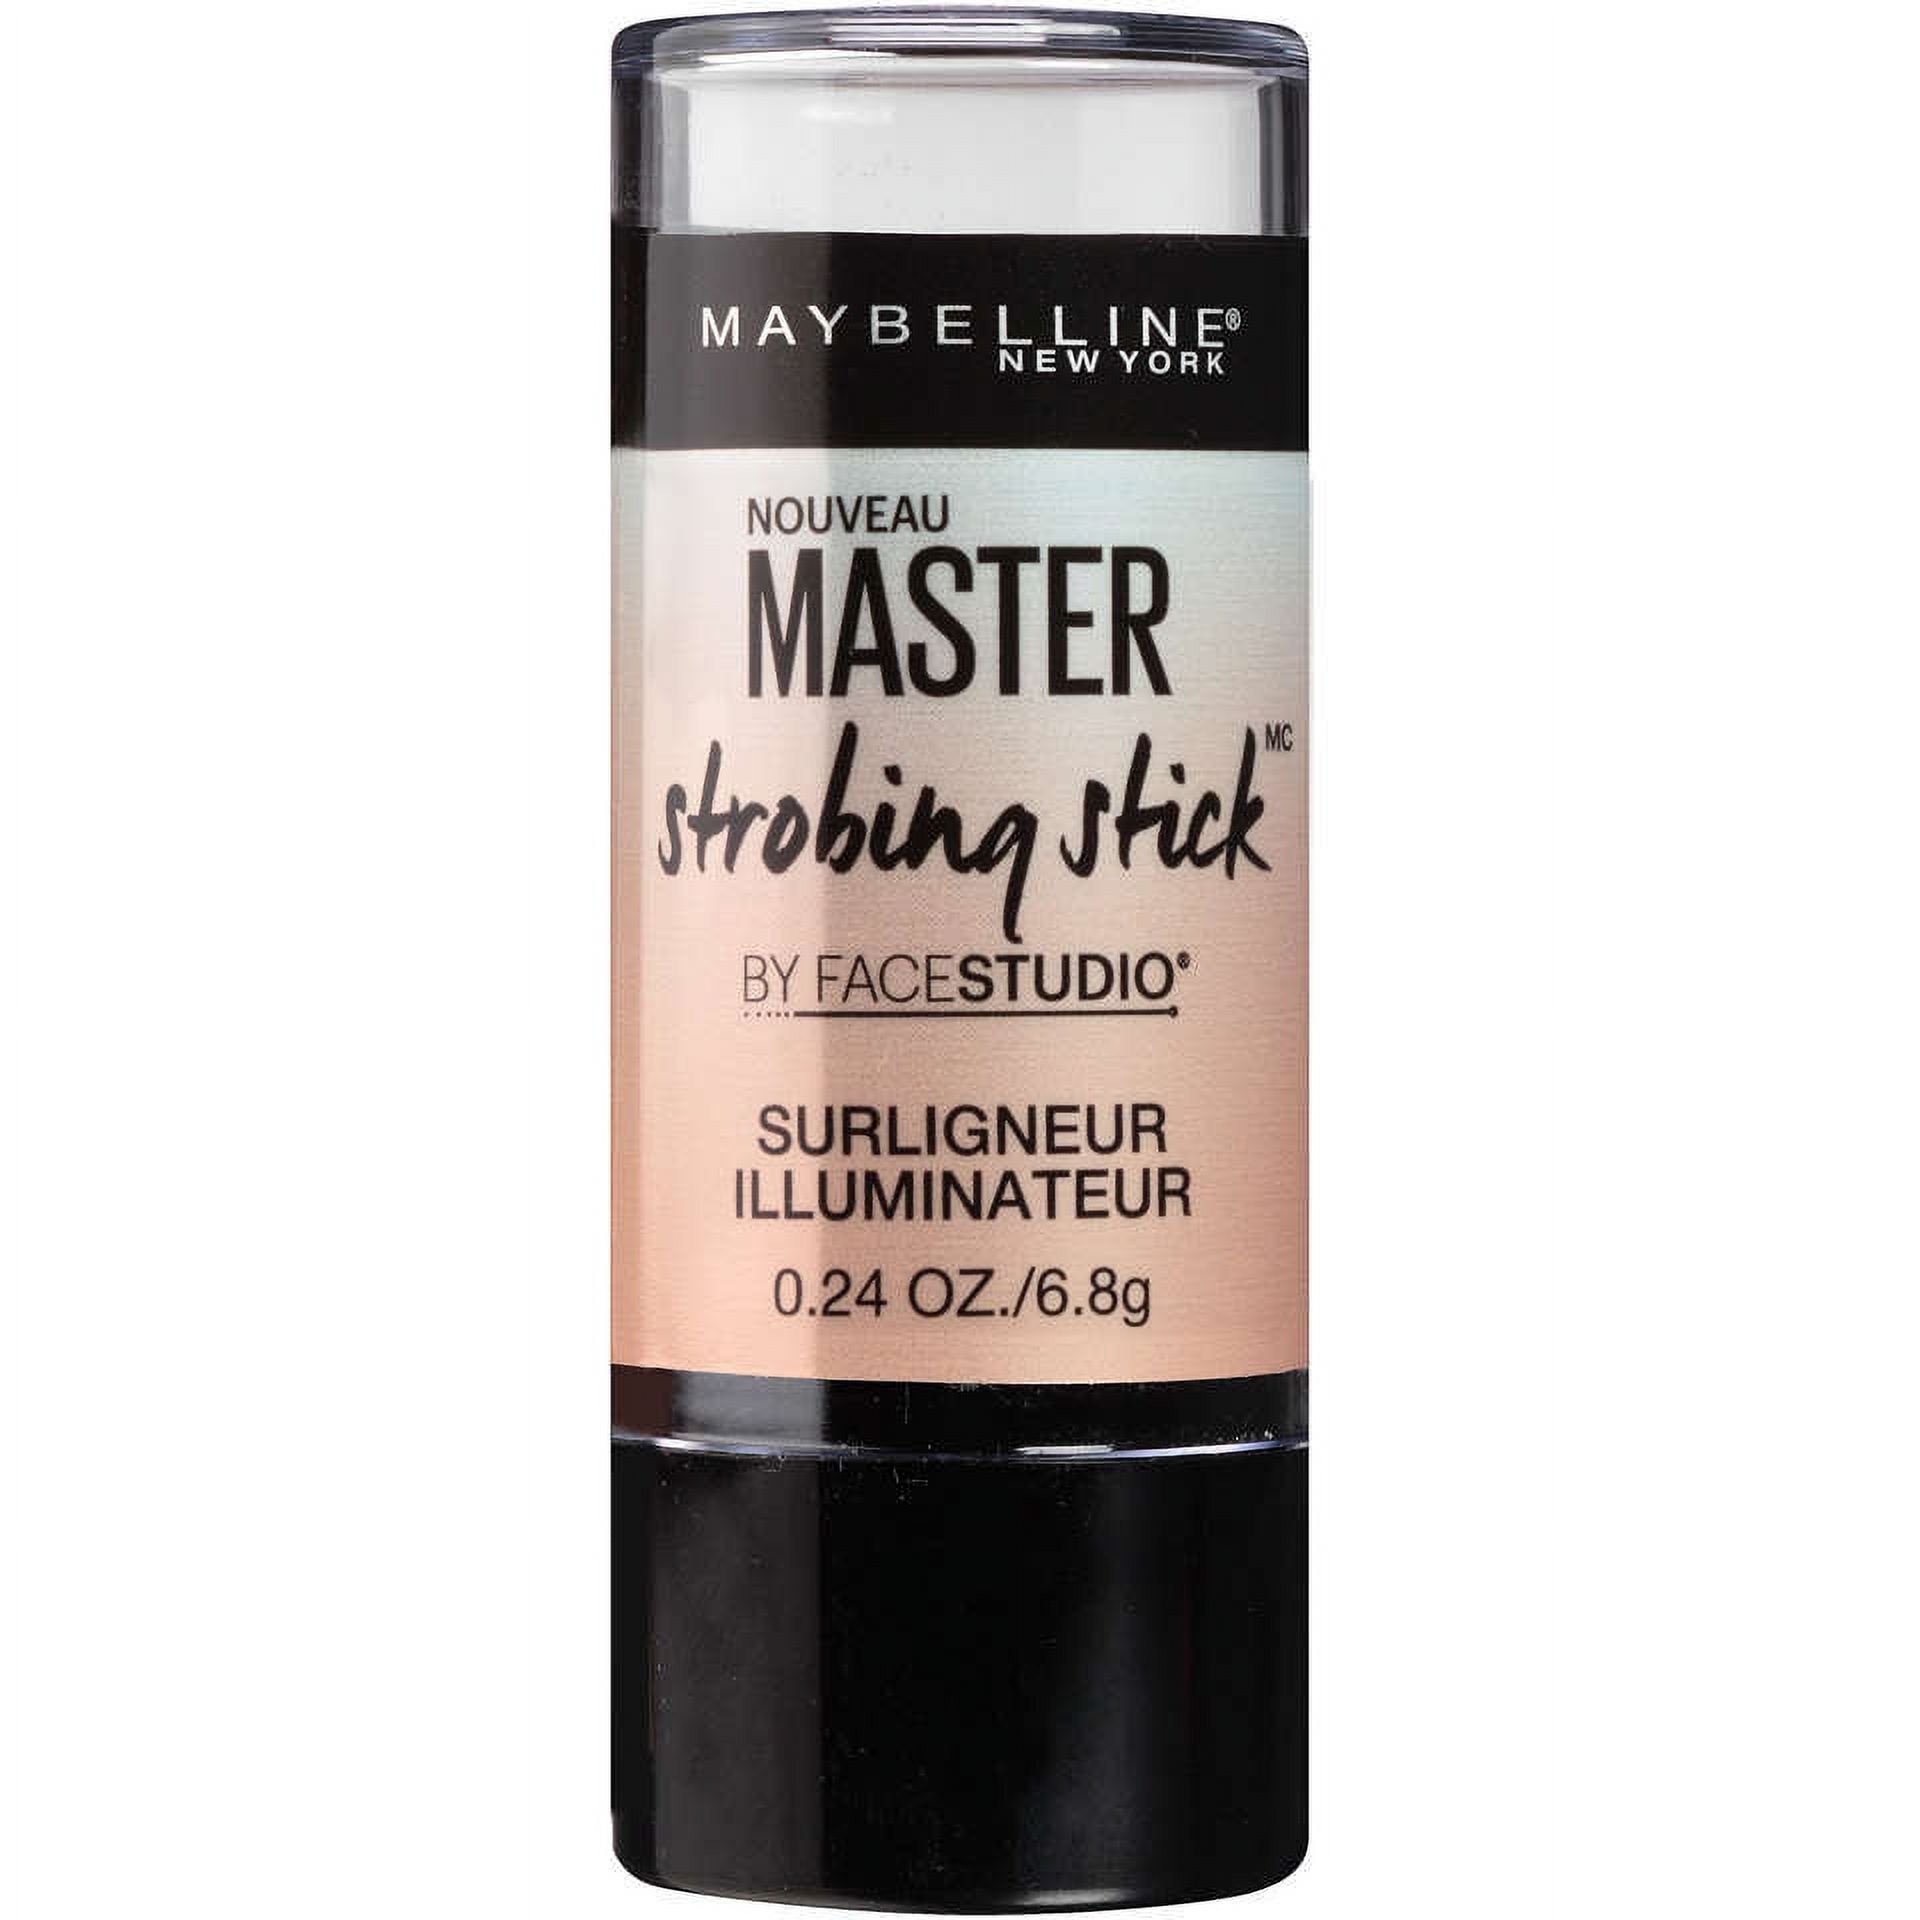 Maybelline Facestudio Master Strobing Makeup, Illuminating Highlighter, 0.24 oz - image 4 of 5